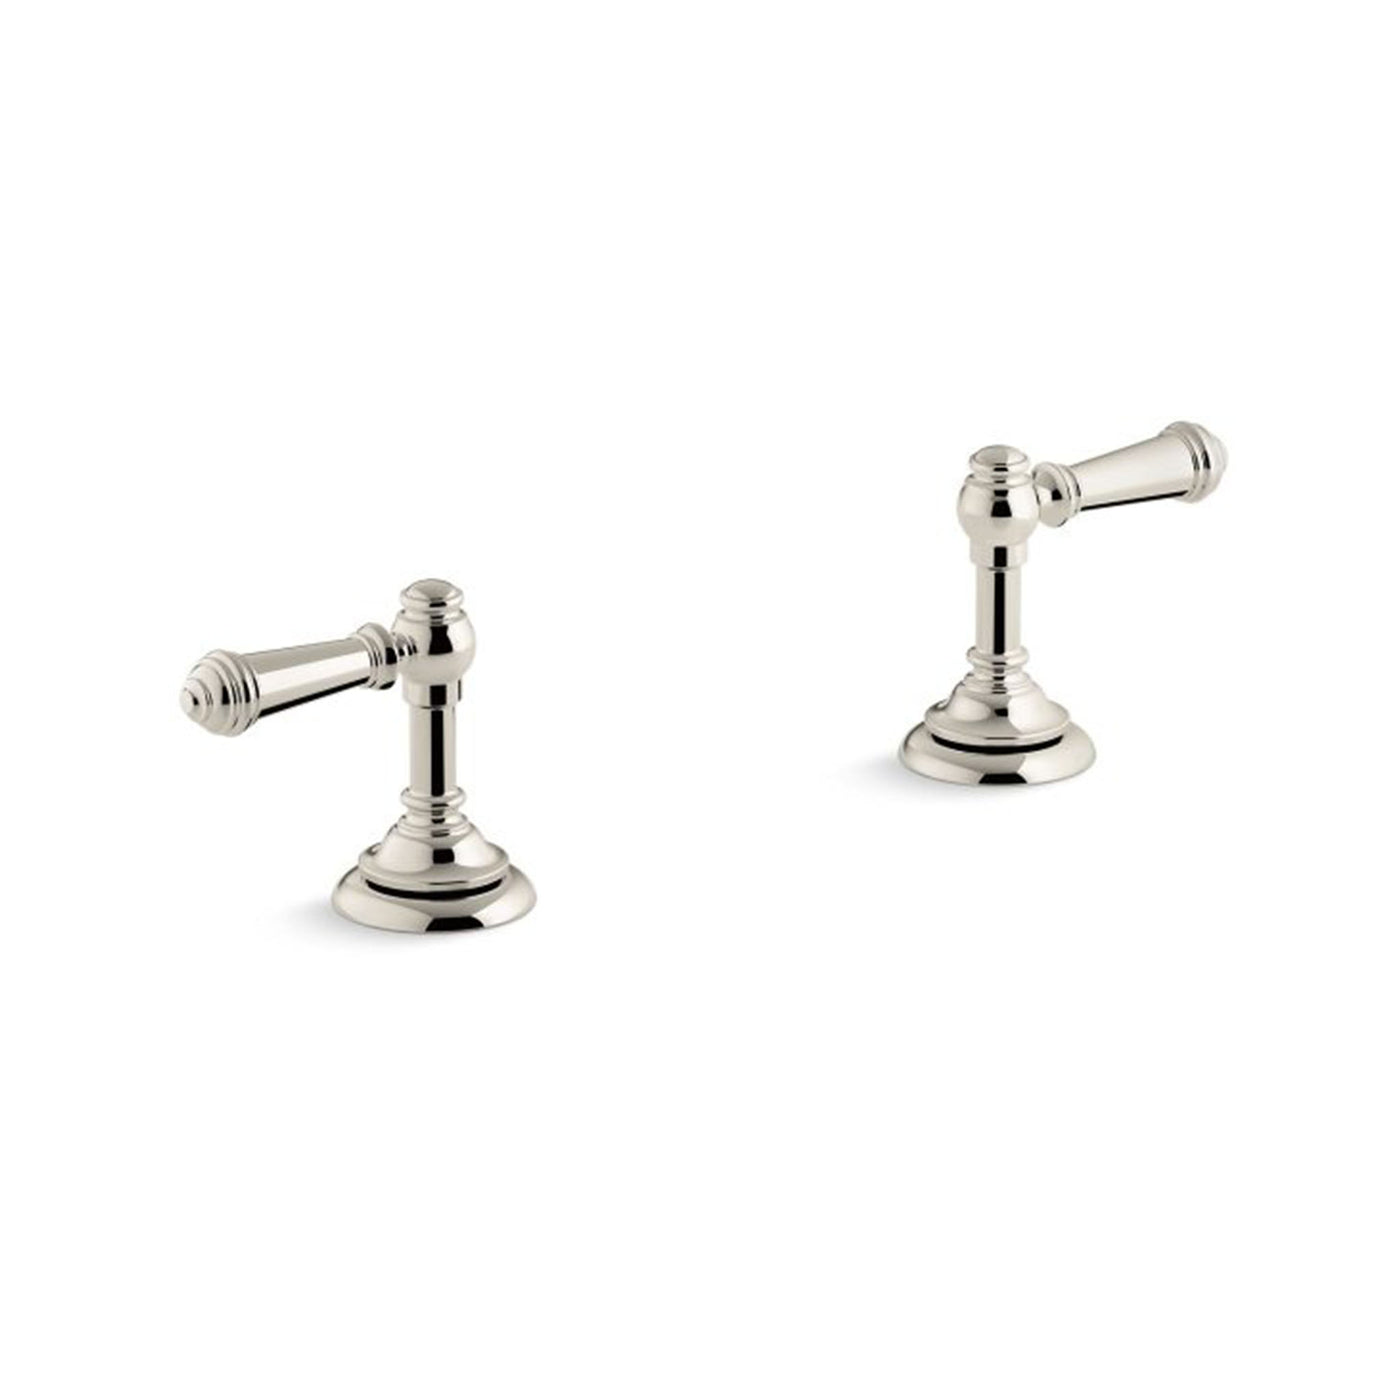 Artifacts® Lever bathroom sink faucet handles